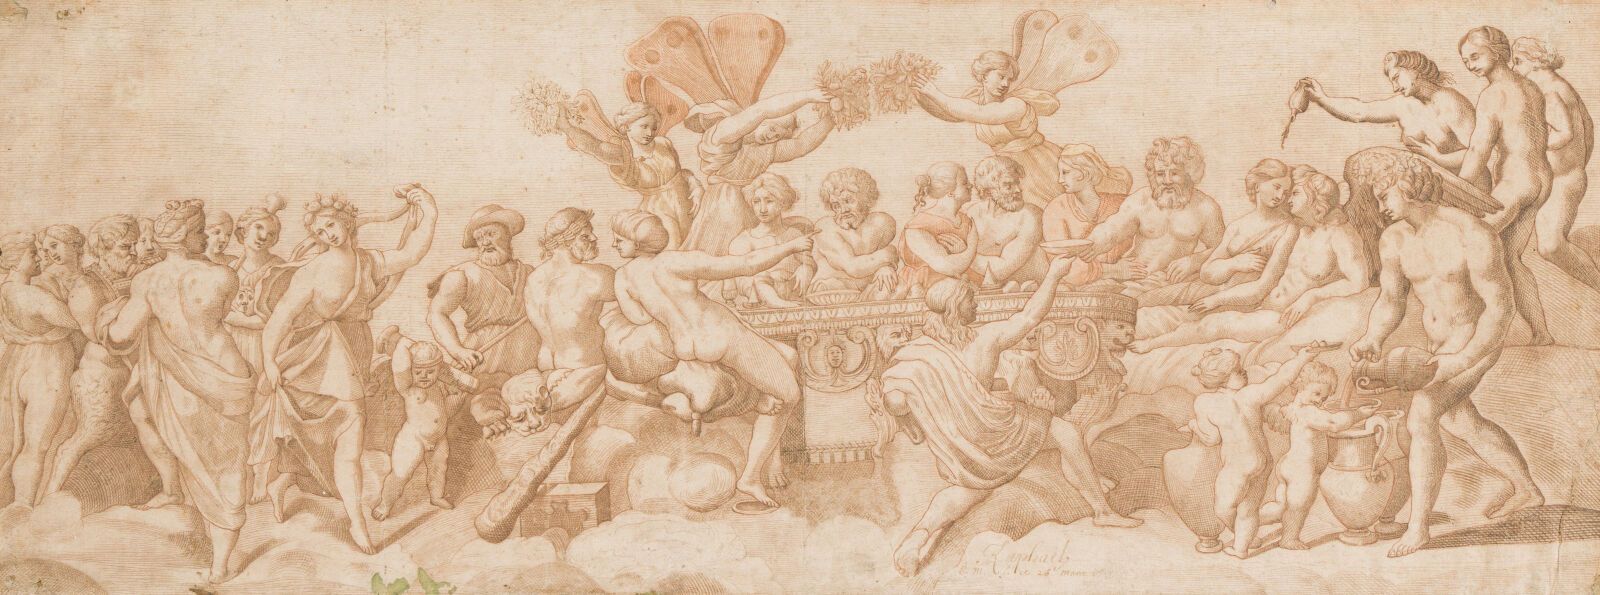 Null 7.17世纪的意大利学校

诸神的盛宴

钢笔和棕色水墨（折叠、污渍和

和雀斑)

18.5 x 49 厘米

承担了一个签名。